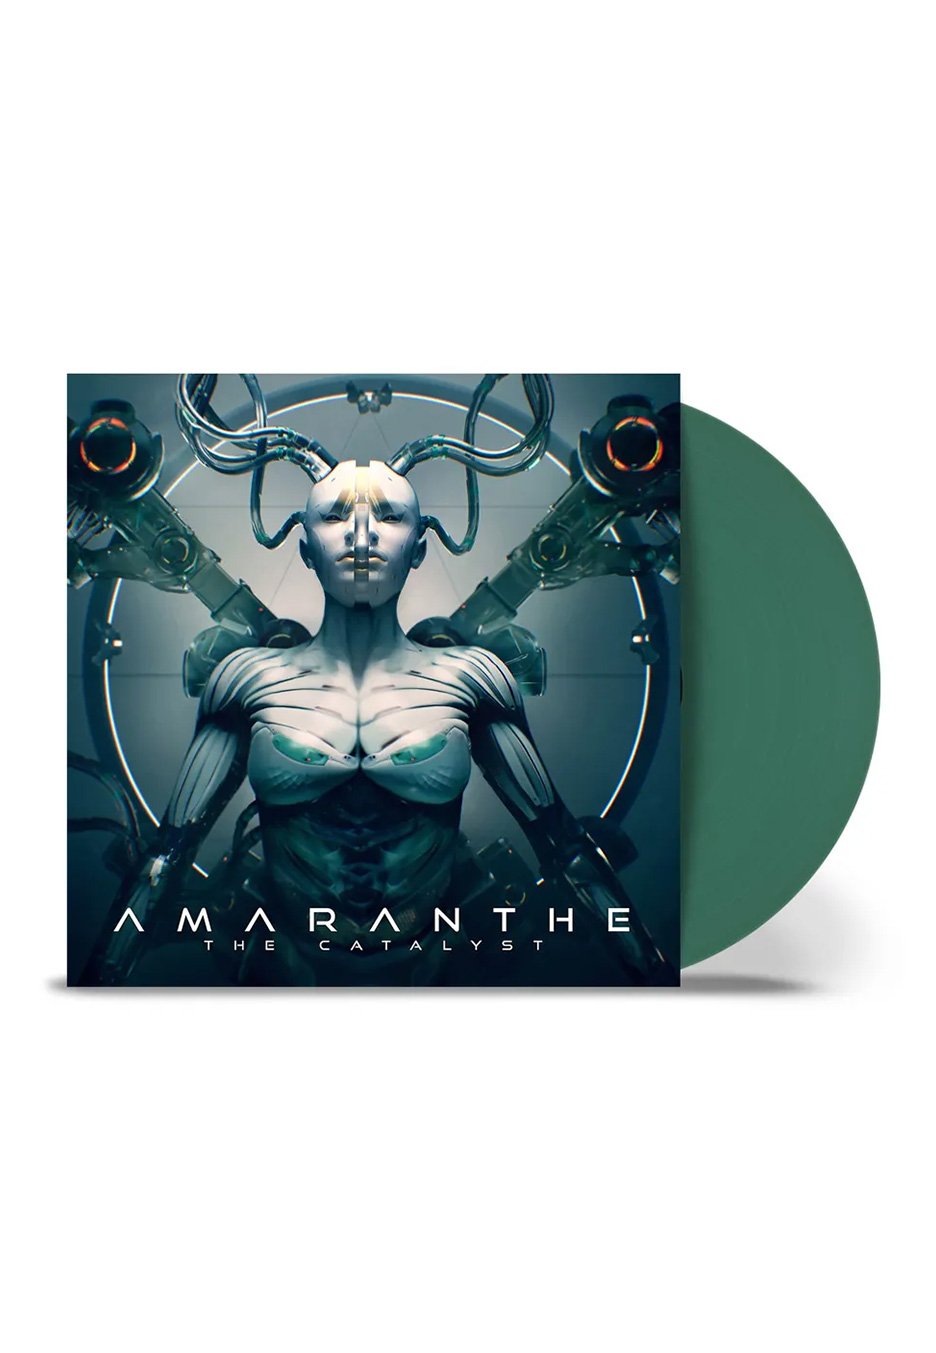 Amaranthe - The Catalyst Ltd. Green - Colored Vinyl